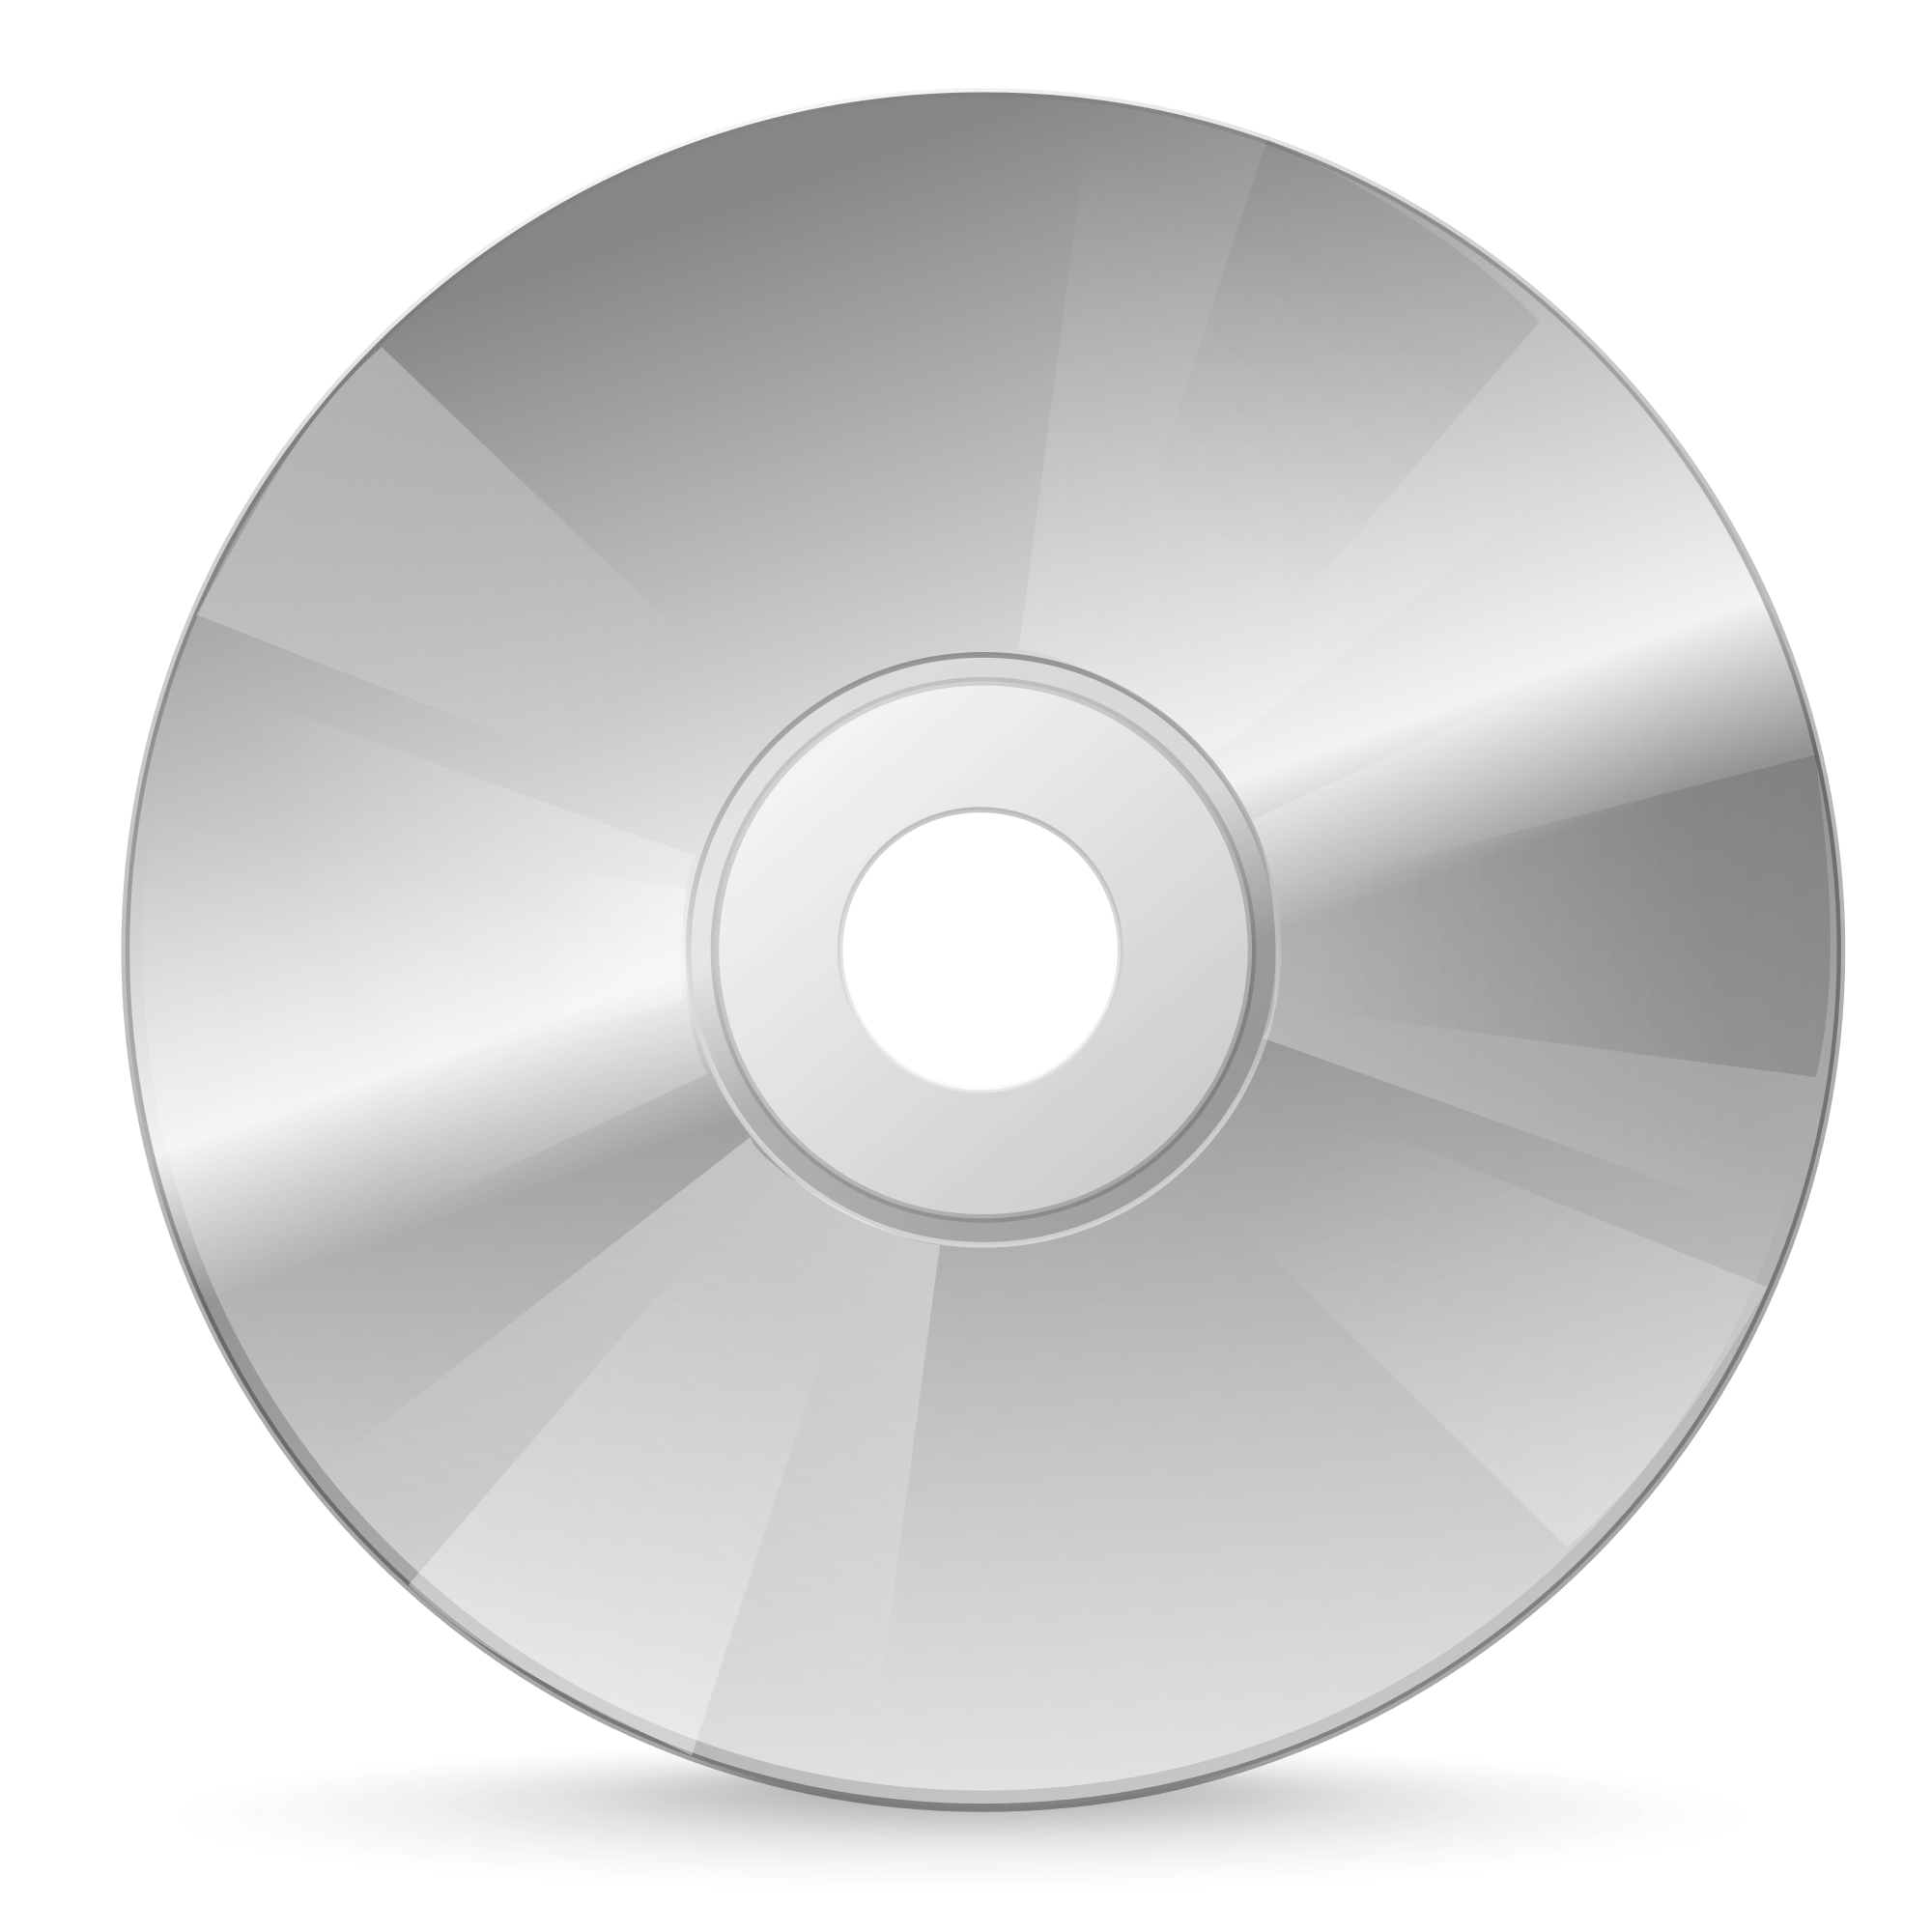 C cd y y. CD - Compact Disk (компакт диск). CD (Compact Disk ROM) DVD (Digital versatile Disc). DVD-диски (DVD – Digital versatile Disk, цифровой универсальный диск),. Двд диск сбоку.